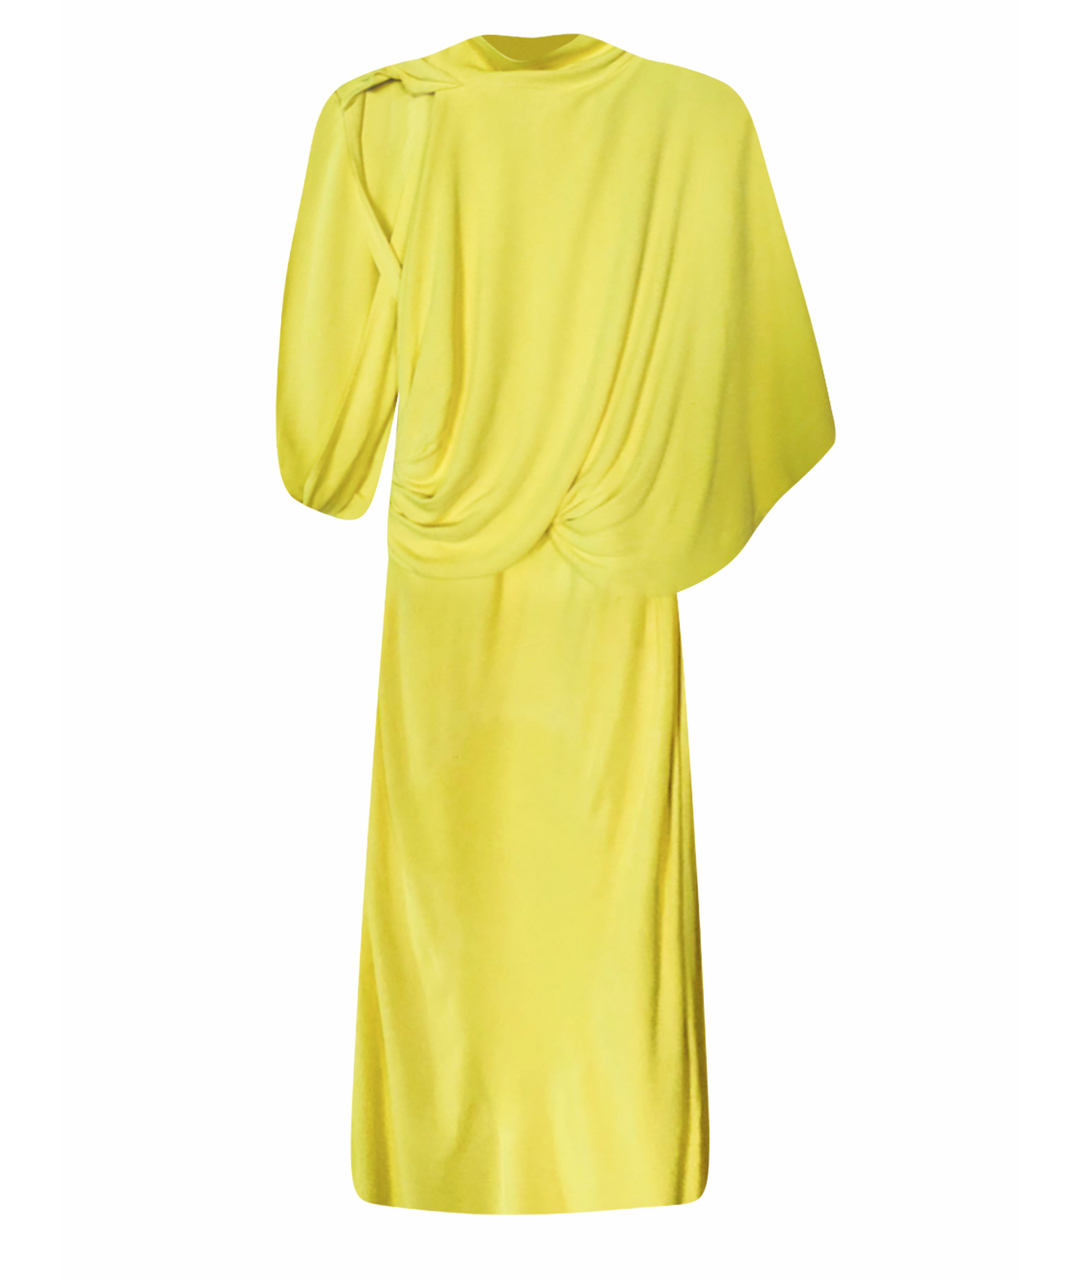 VERSACE COLLECTION Желтое шелковое коктейльное платье, фото 1